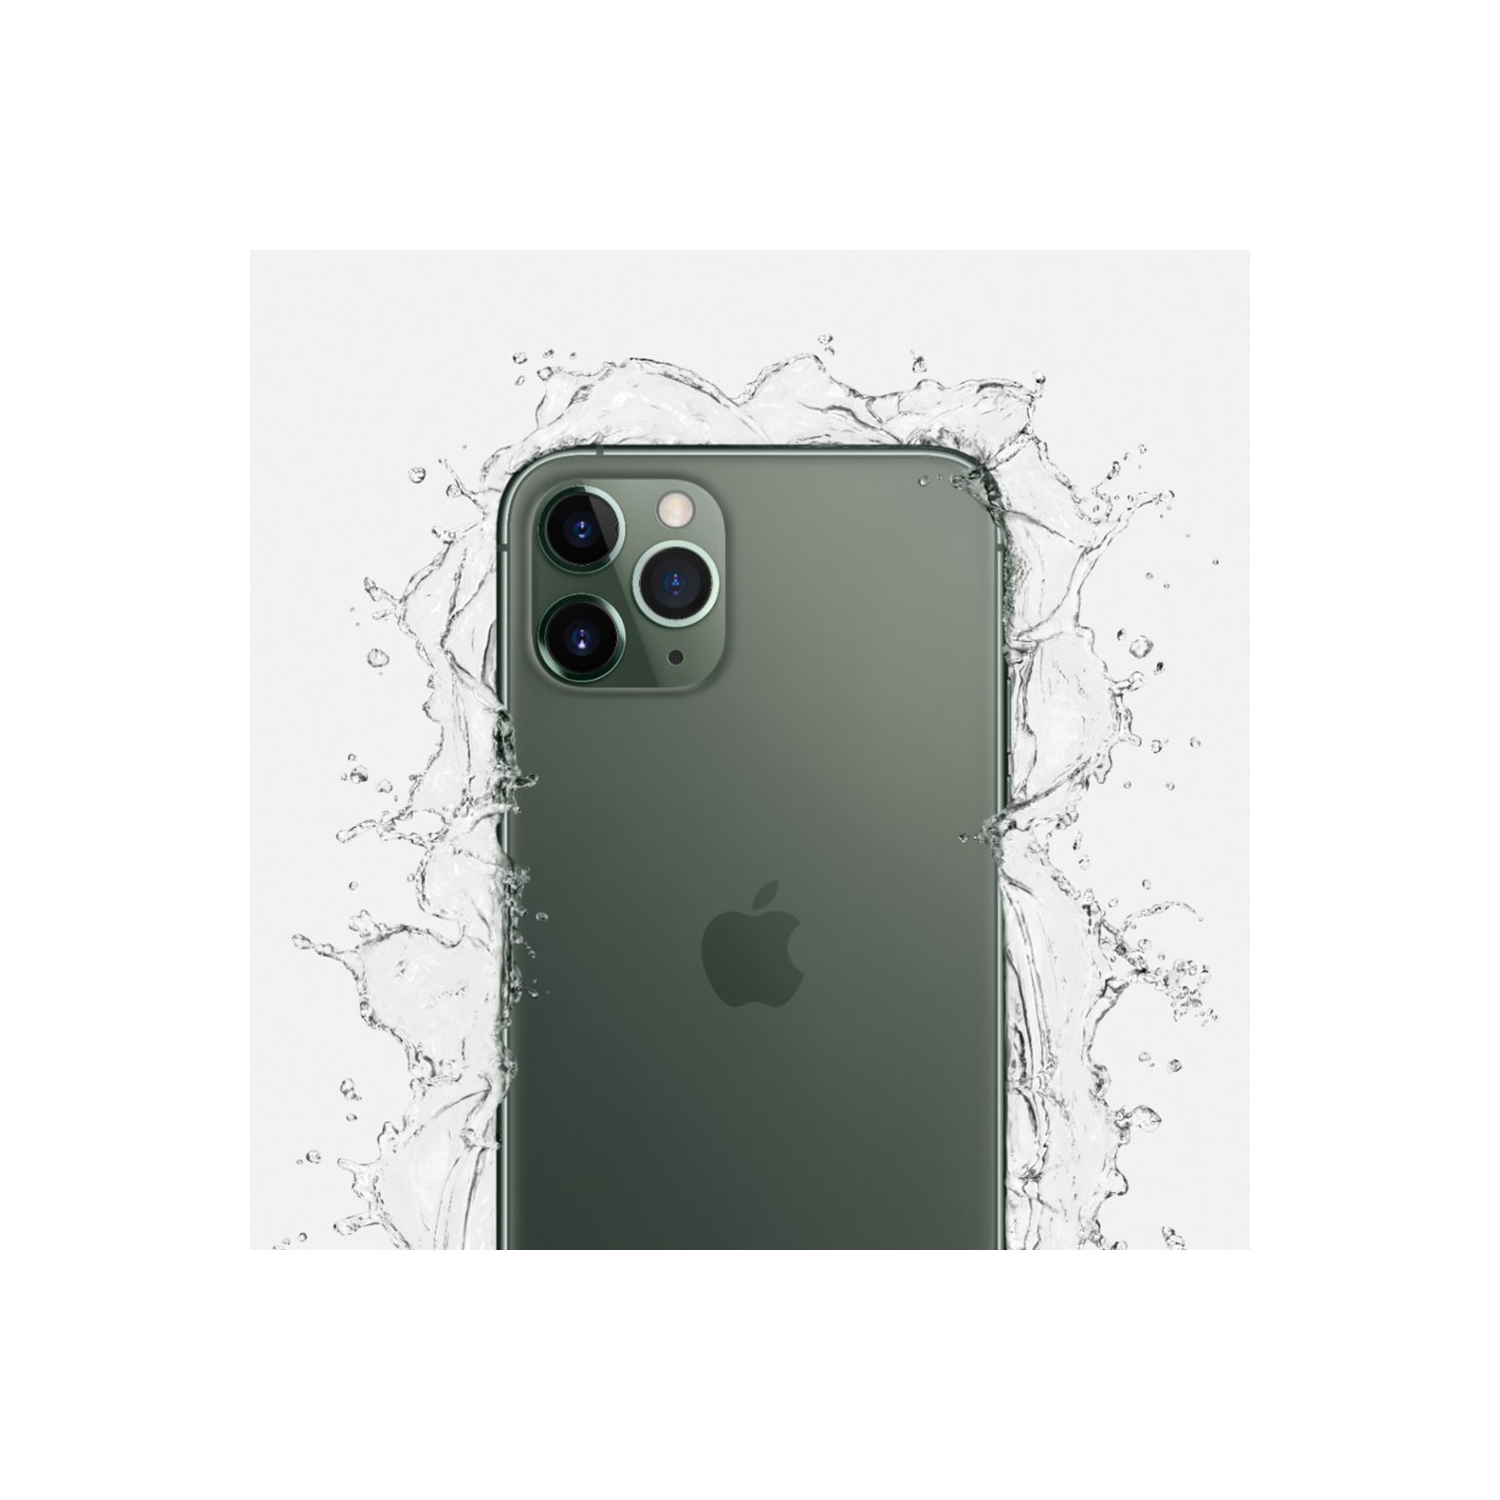 Apple iPhone 11 Pro Max 256GB Smartphone - Midnight Green